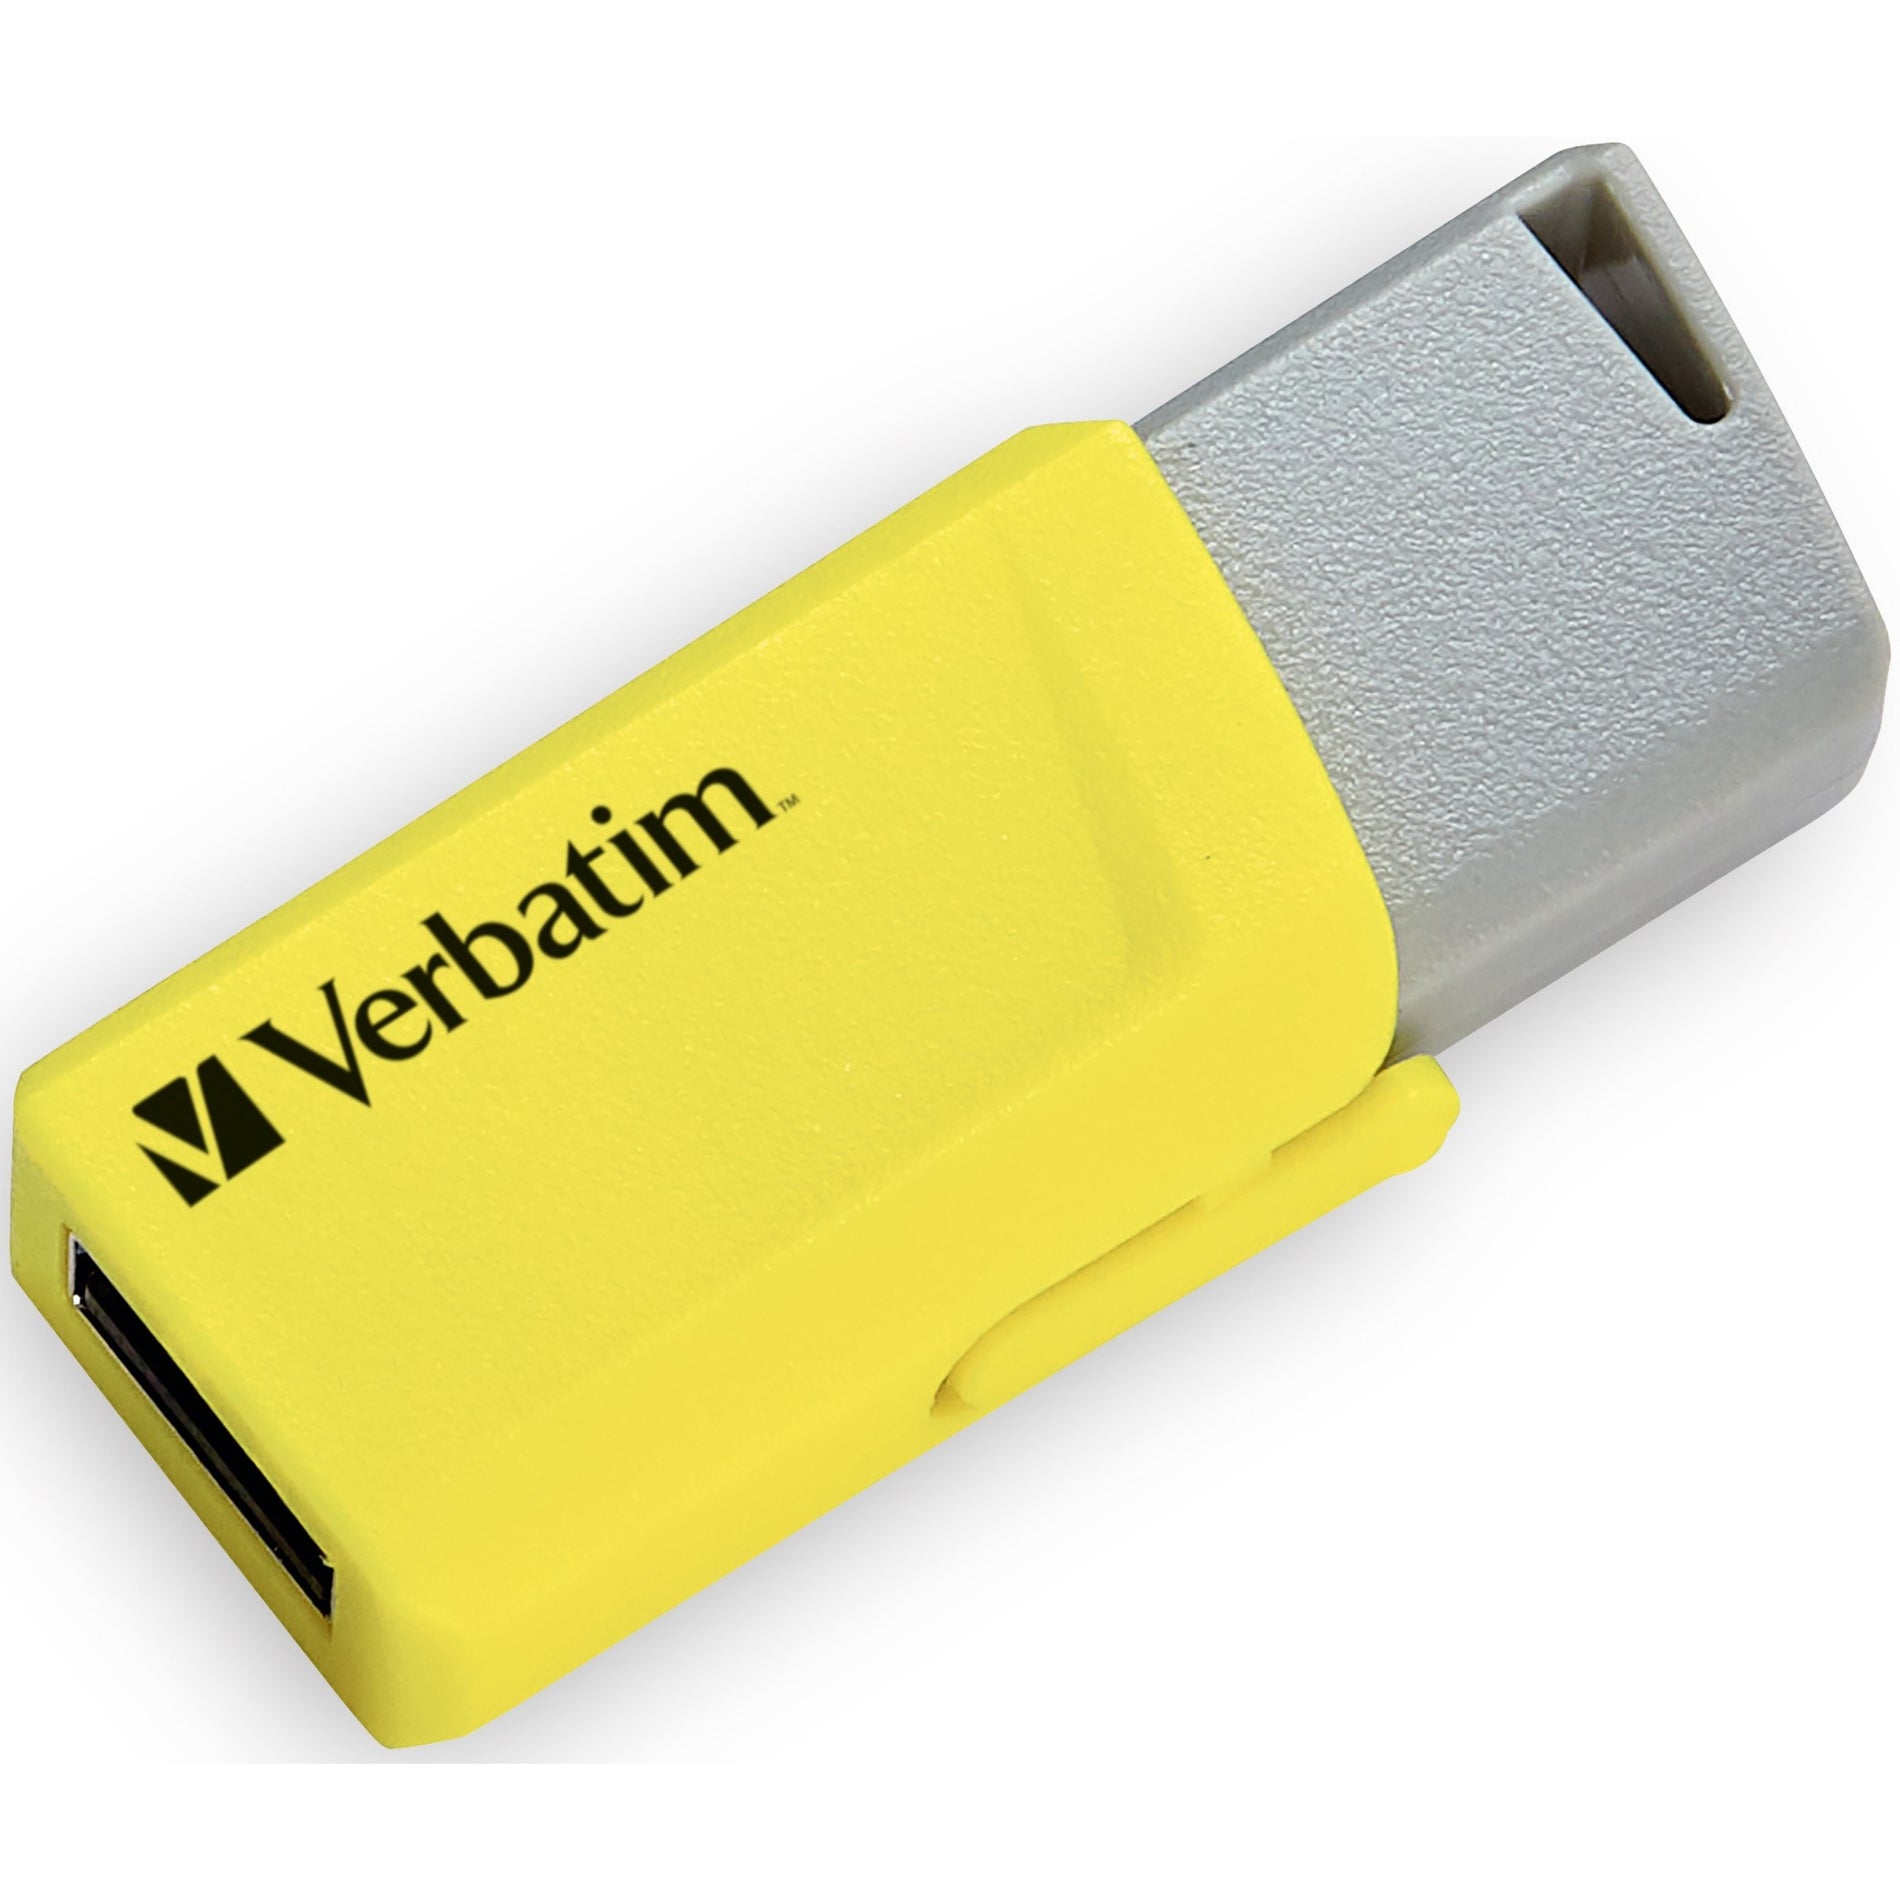 Verbatim 70376 Store 'n' Click USB Flash Drive 16GB, Lifetime Warranty, UL Listed Certification